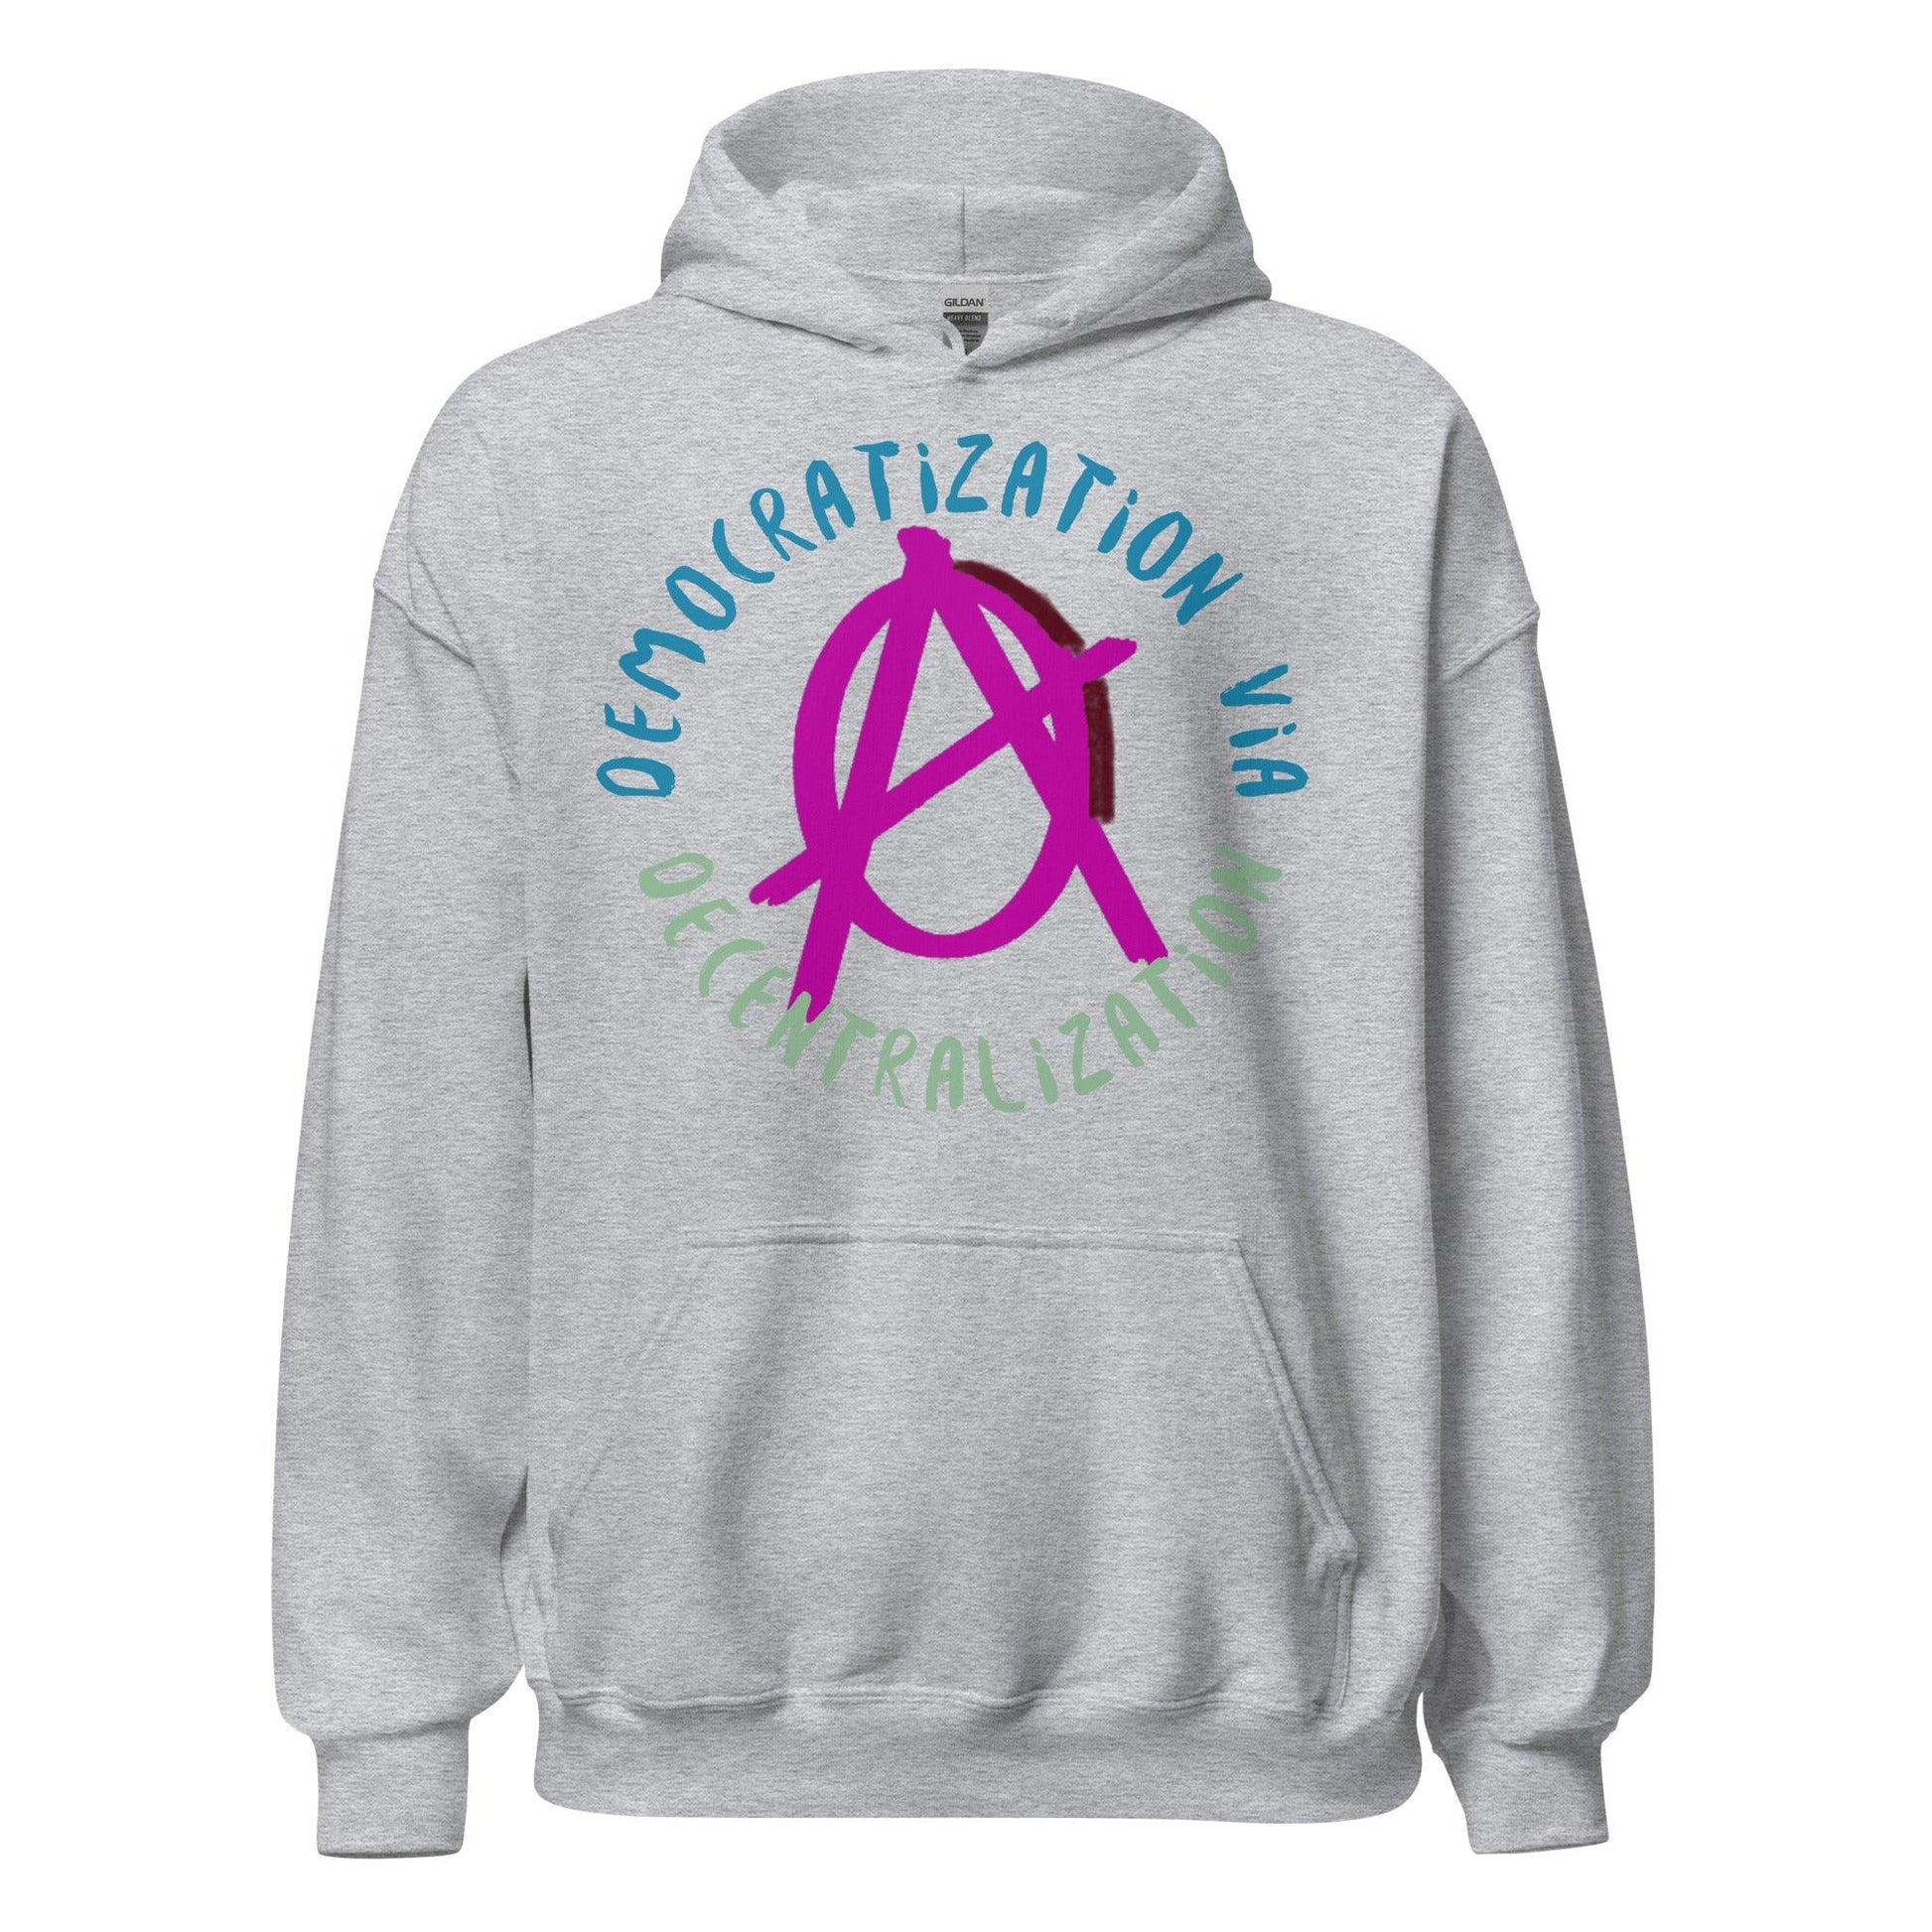 Anarchy Wear Pink "Decentralization" Hoodie - AnarchyWear